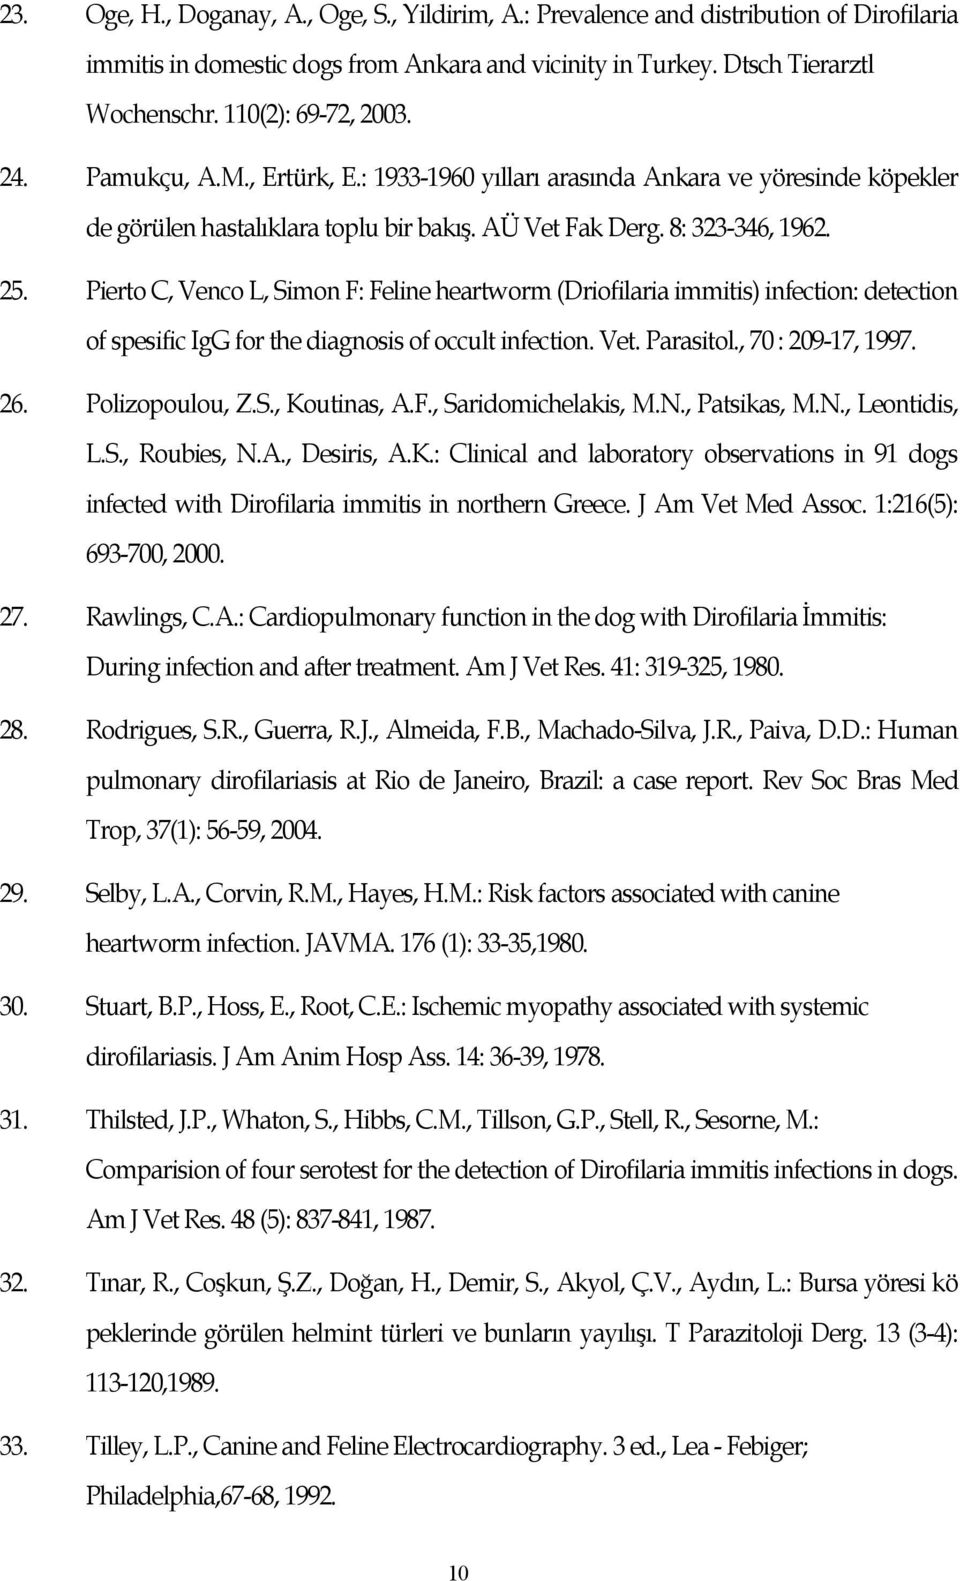 Pierto C, Venco L, Simon F: Feline heartworm (Driofilaria immitis) infection: detection of spesific IgG for the diagnosis of occult infection. Vet. Parasitol., 70 : 209-17, 1997. 26. Polizopoulou, Z.